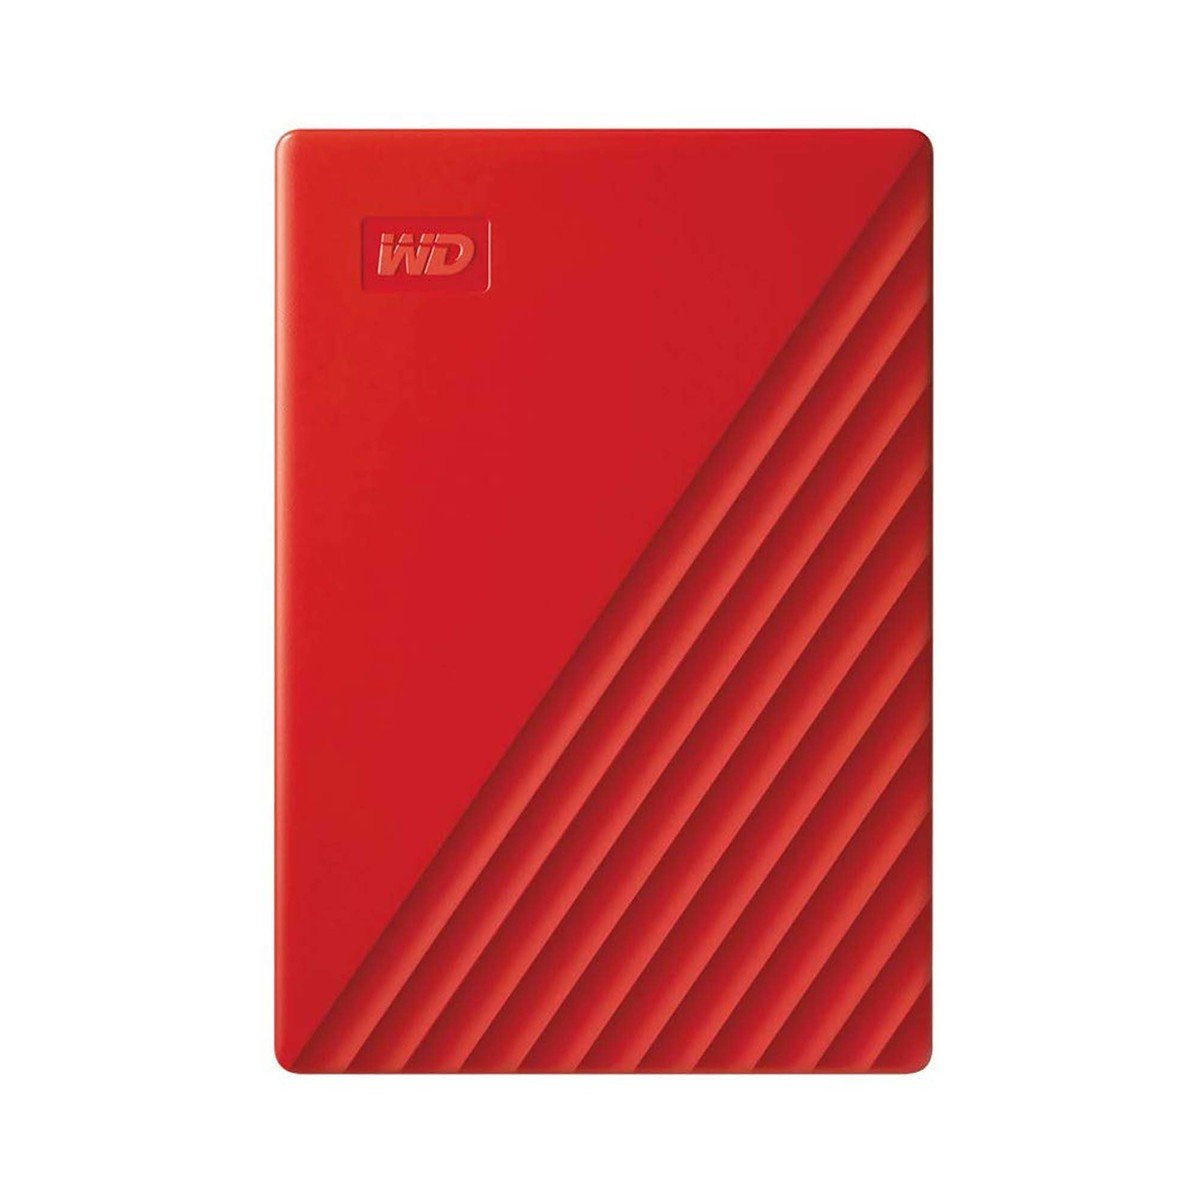 WD 4TB My Passport Portable External Hard Drive, Red